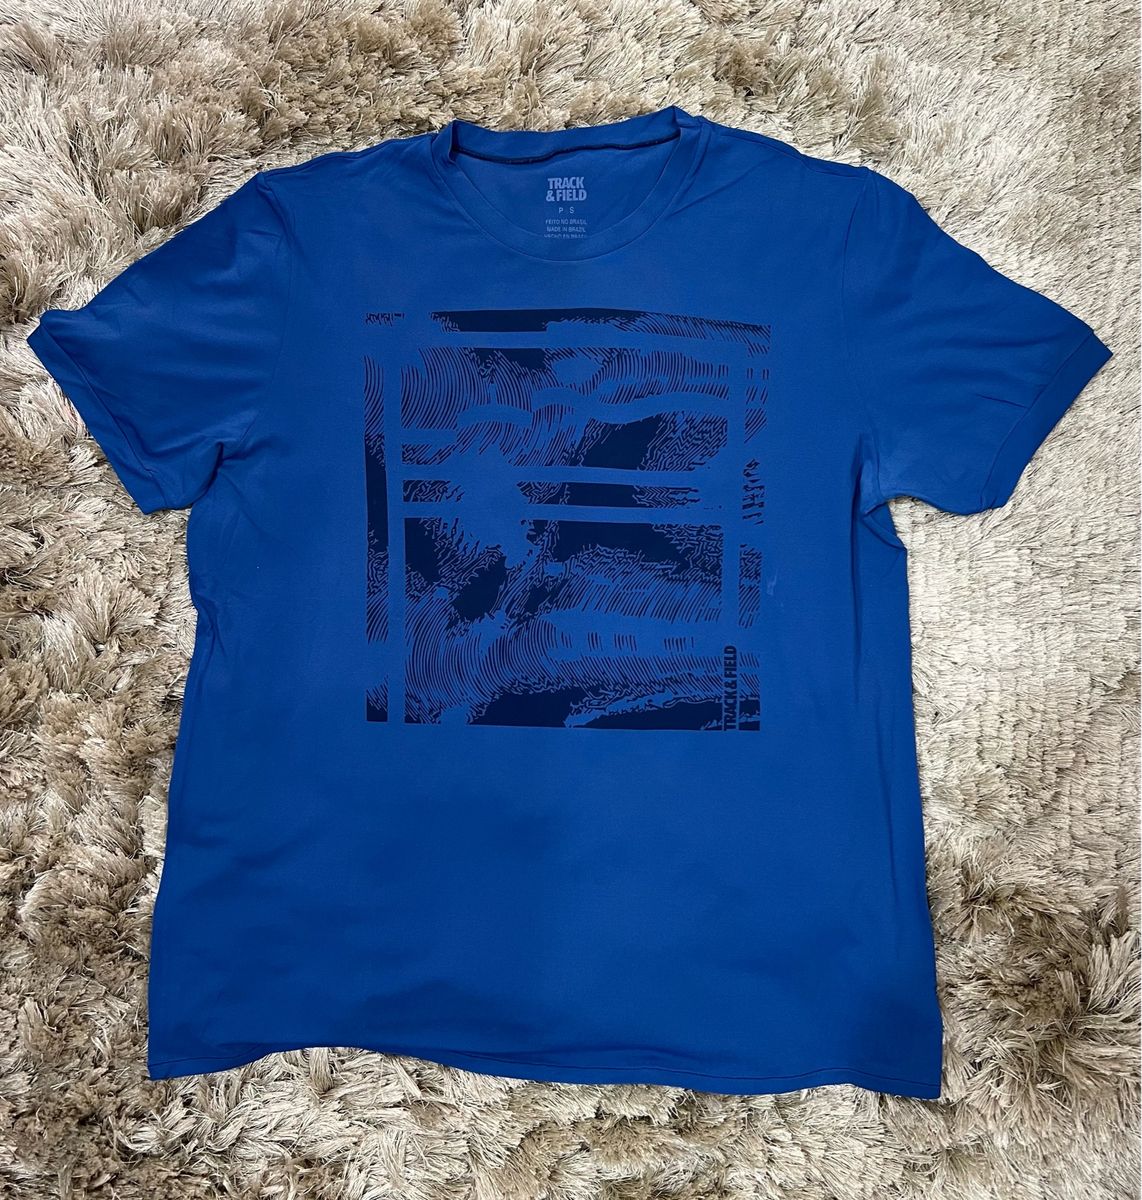 Camiseta Track Field Cool Cotton 100% - Cor Azul - Tam. Gg / Xl, Camiseta  Masculina Track & Field Usado 94952180